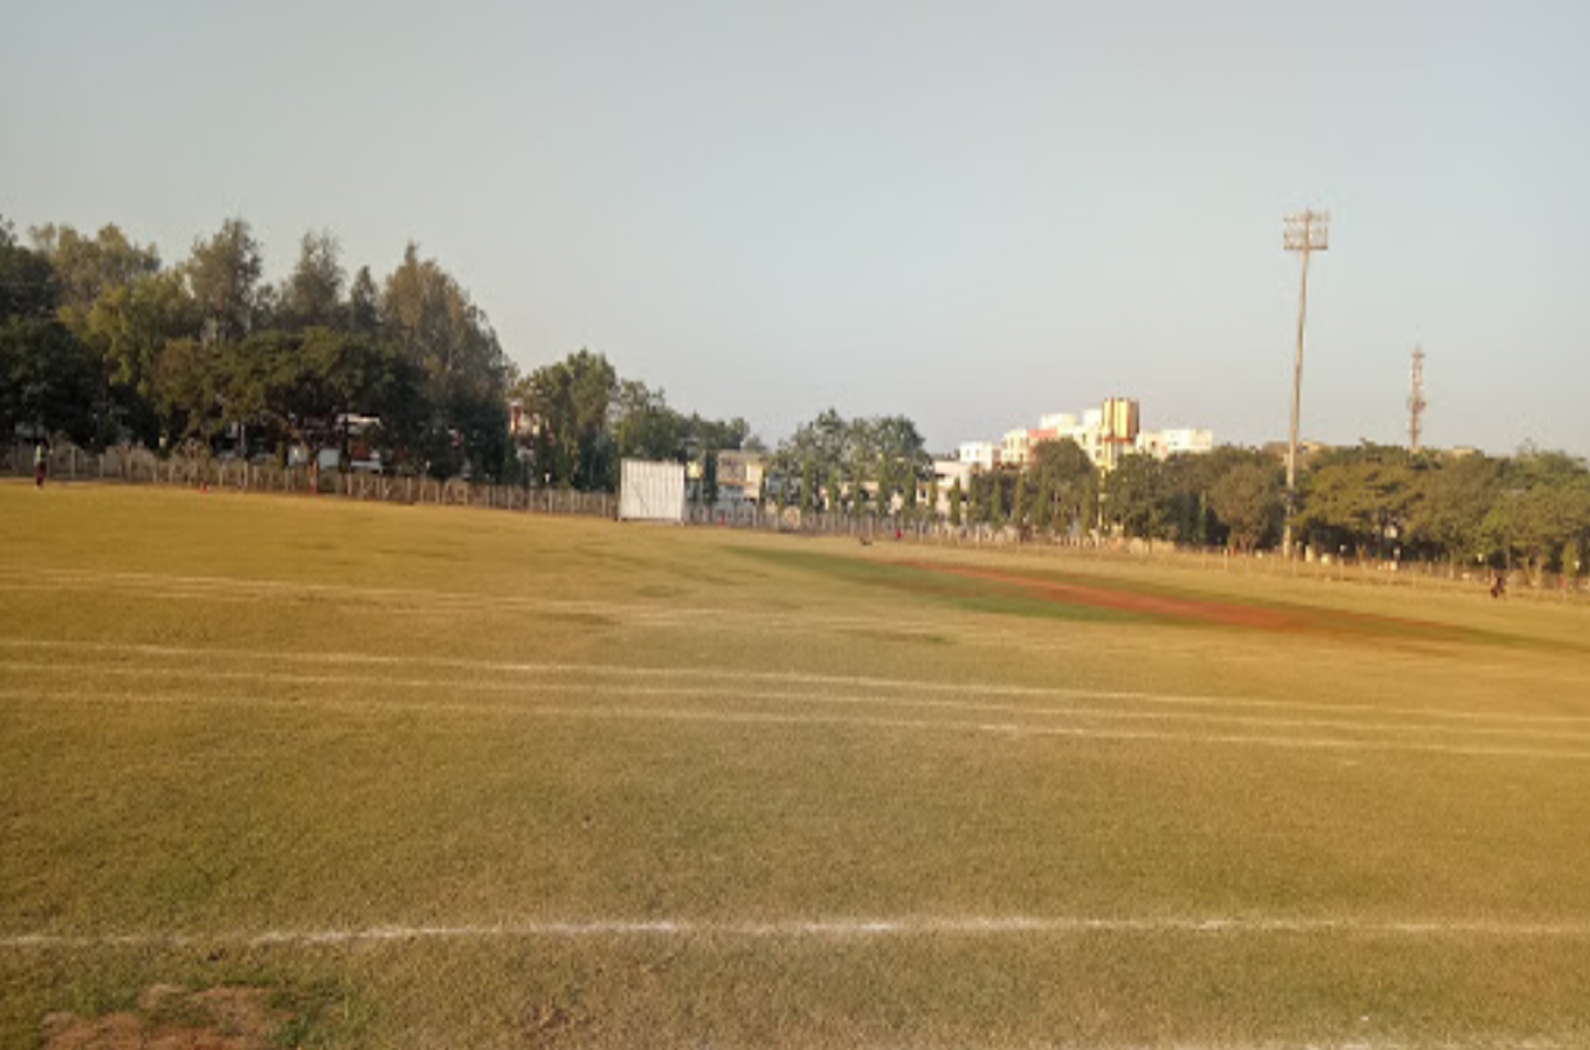 Swami Vivekananda Sports Complex